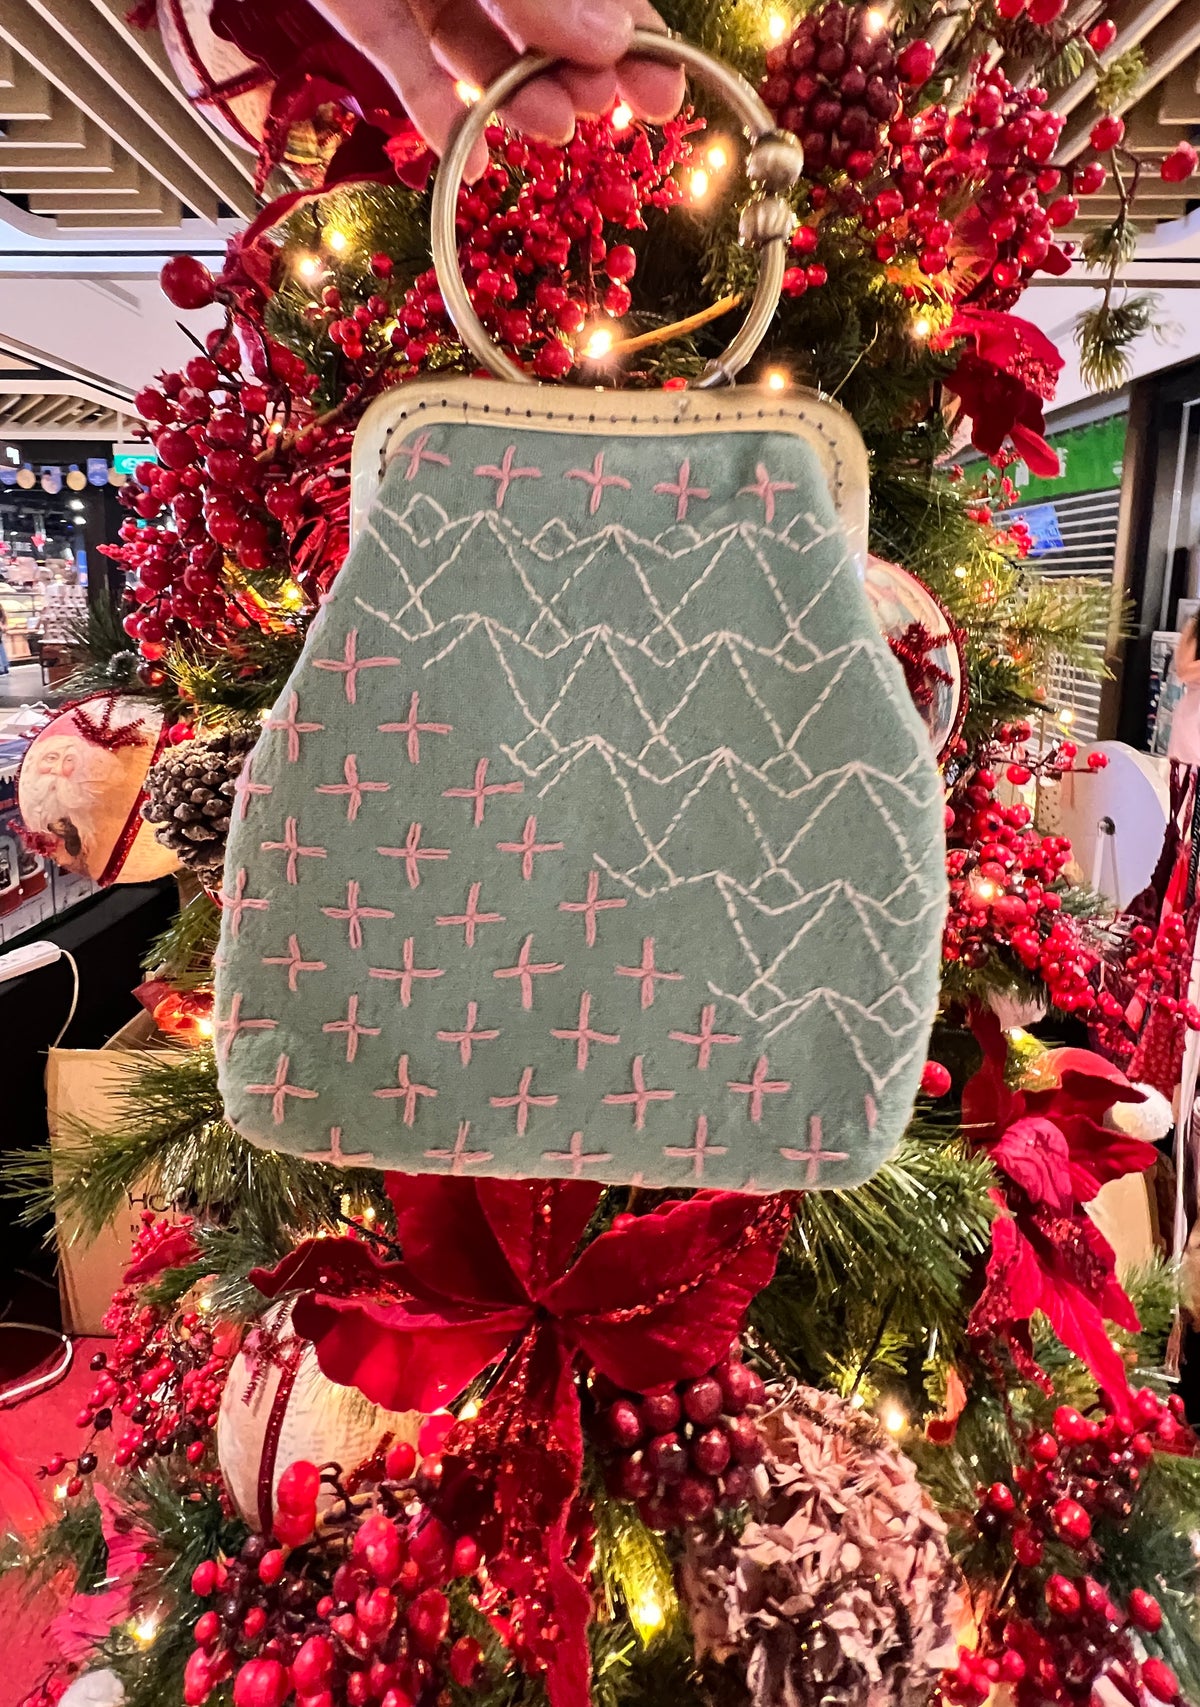 Mami Embroidered handbag with chain